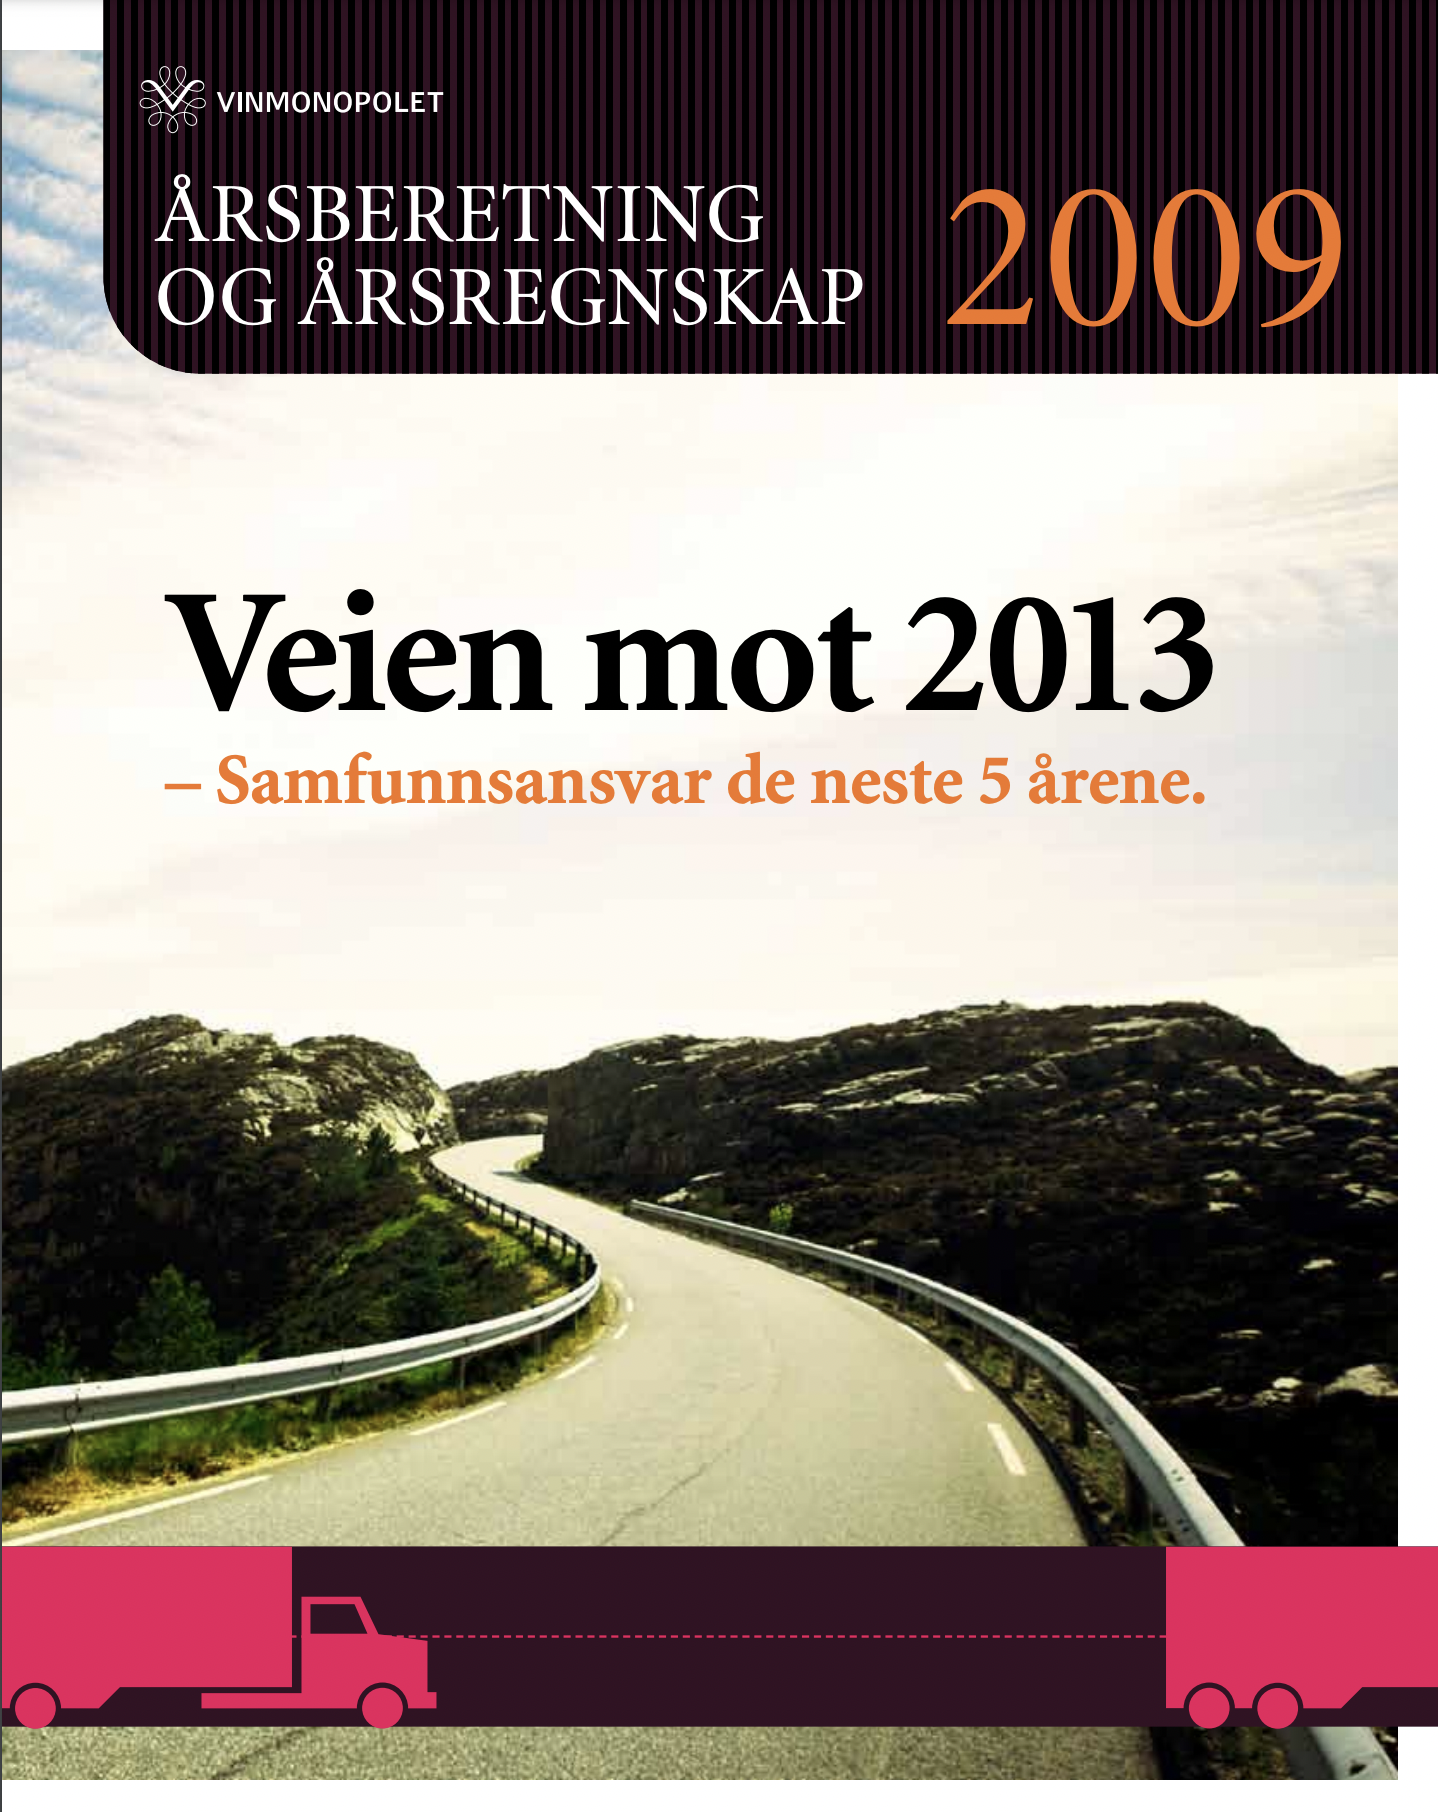 Årsberetning og årsregnskap 2009